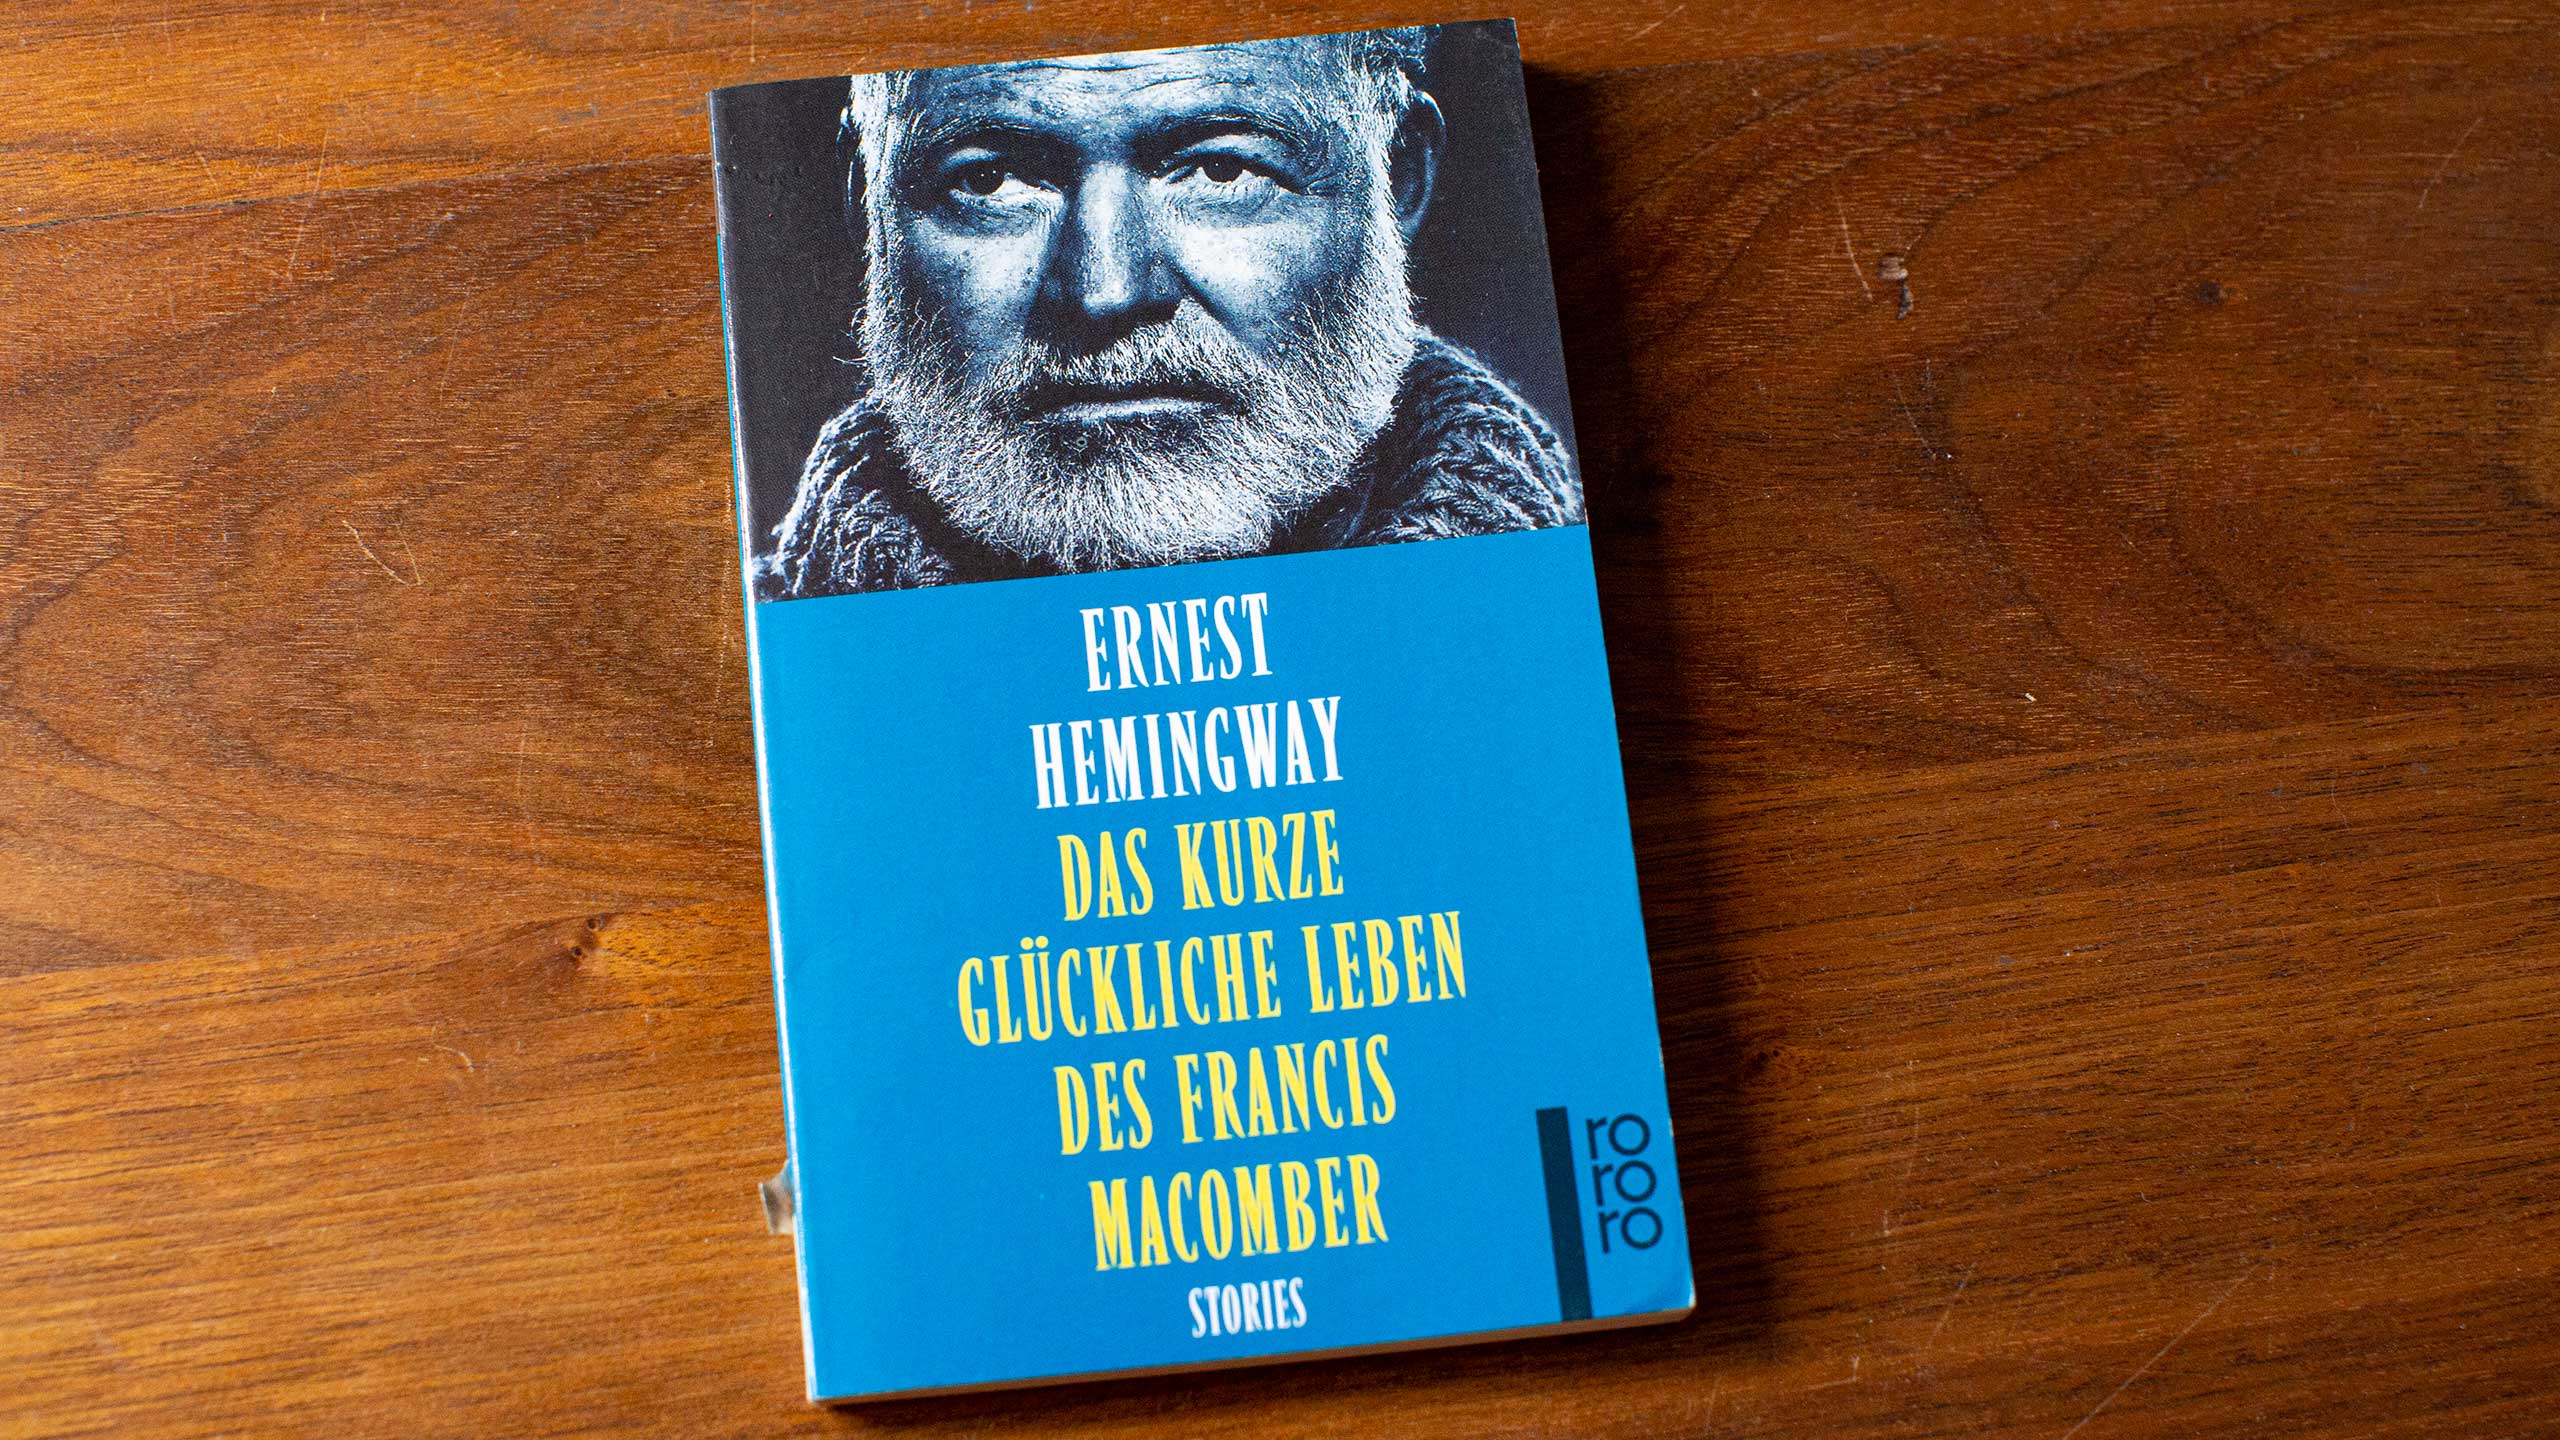 Schullektuere: 'Das kurze glückliche Leben des Francis Macomber' (Ernest Hemingway). Bild: cc Franziska Köppe | madiko